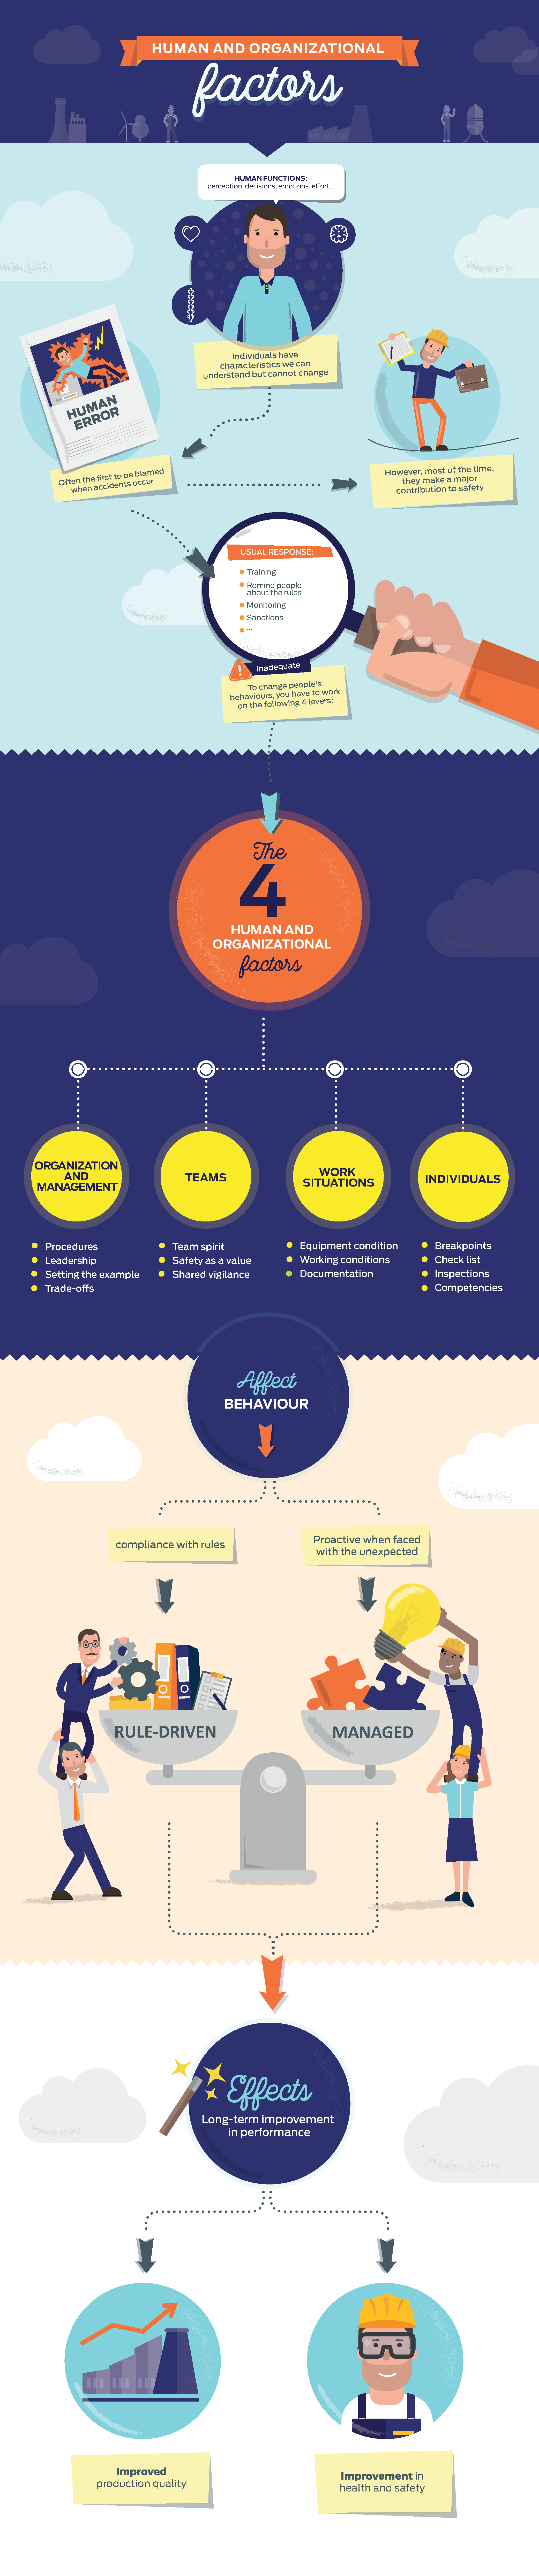 Infografic: human and organizational factors - Credit: BPgraphisme - ©Icsi